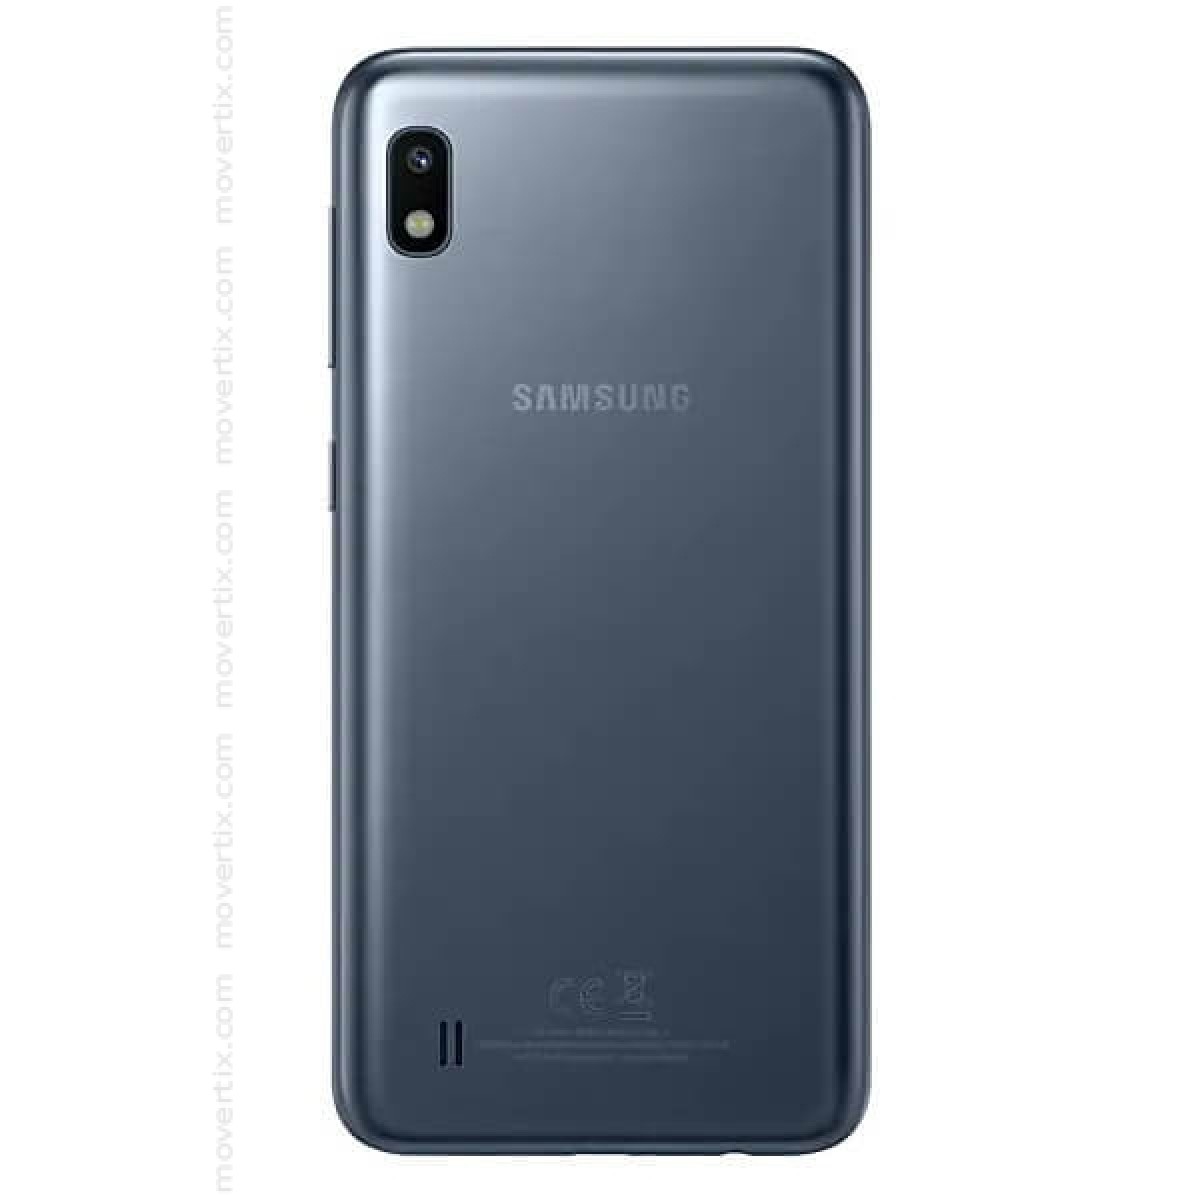 Samsung Galaxy A10 Dual Sim Black 32gb And 2gb Ram Sm A105f Ds Movertix Mobile Phones Shop